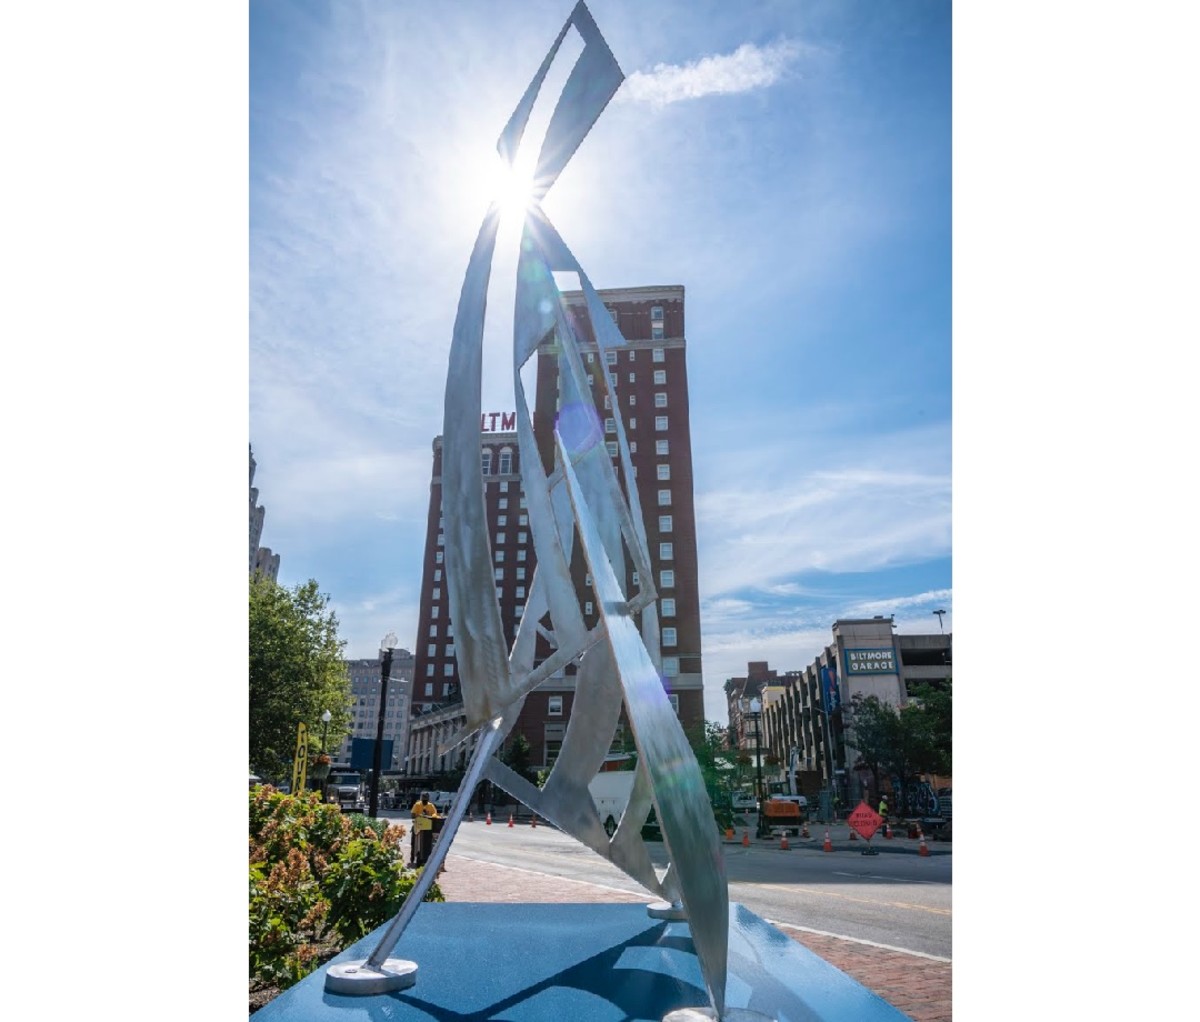 SAIL Dream aluminum sculpture by Eric Camiel